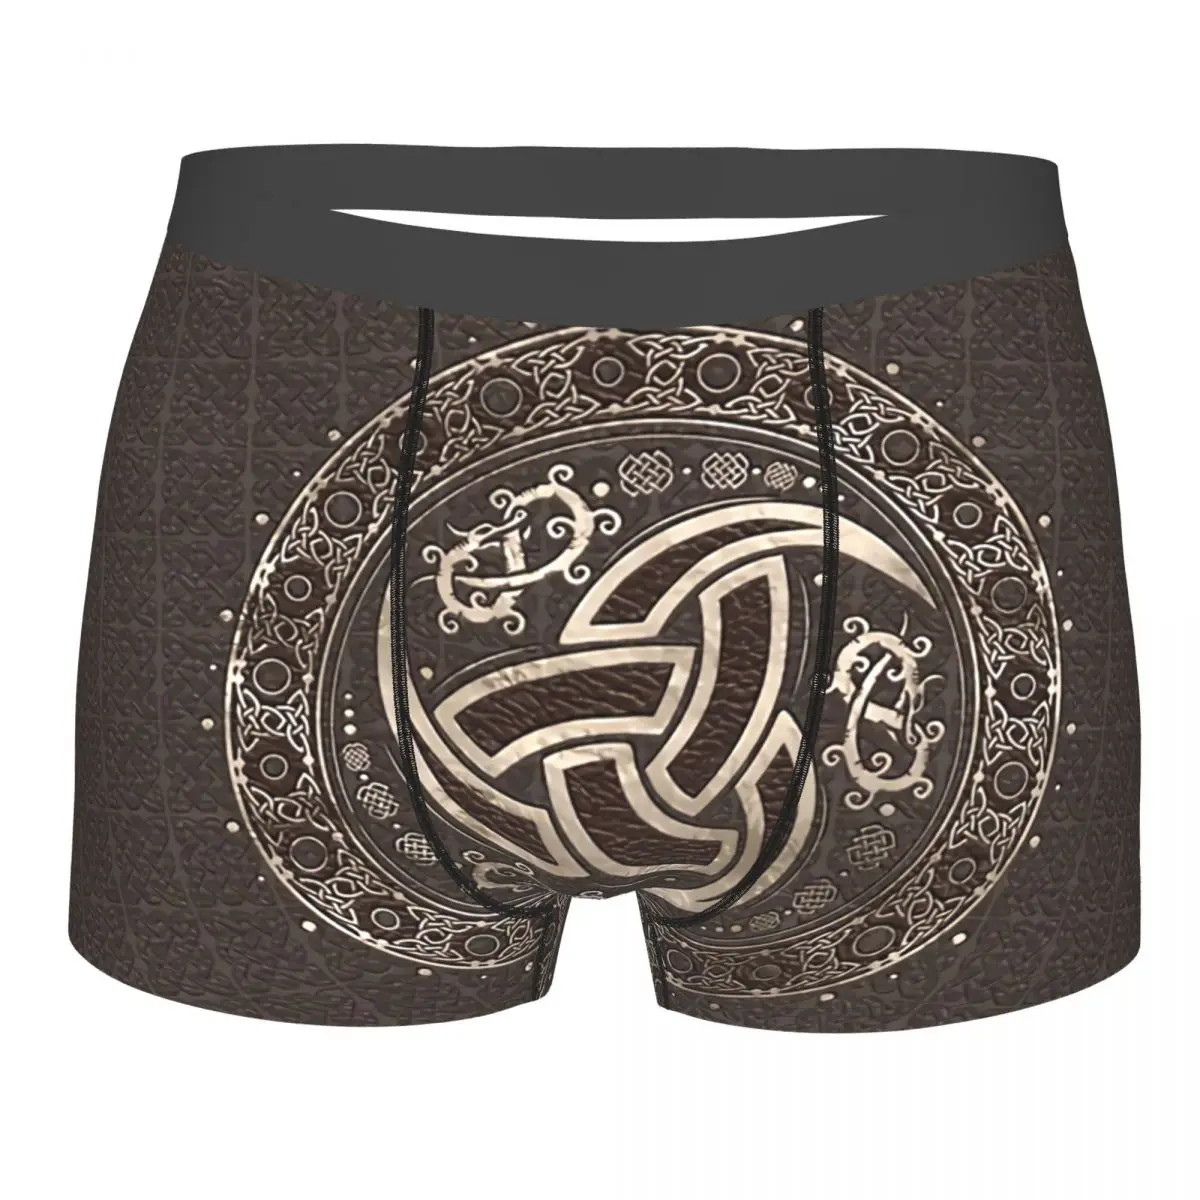 Odin’s Horn Brown3 Underpants Homme Panties Male Underwear Ventilate